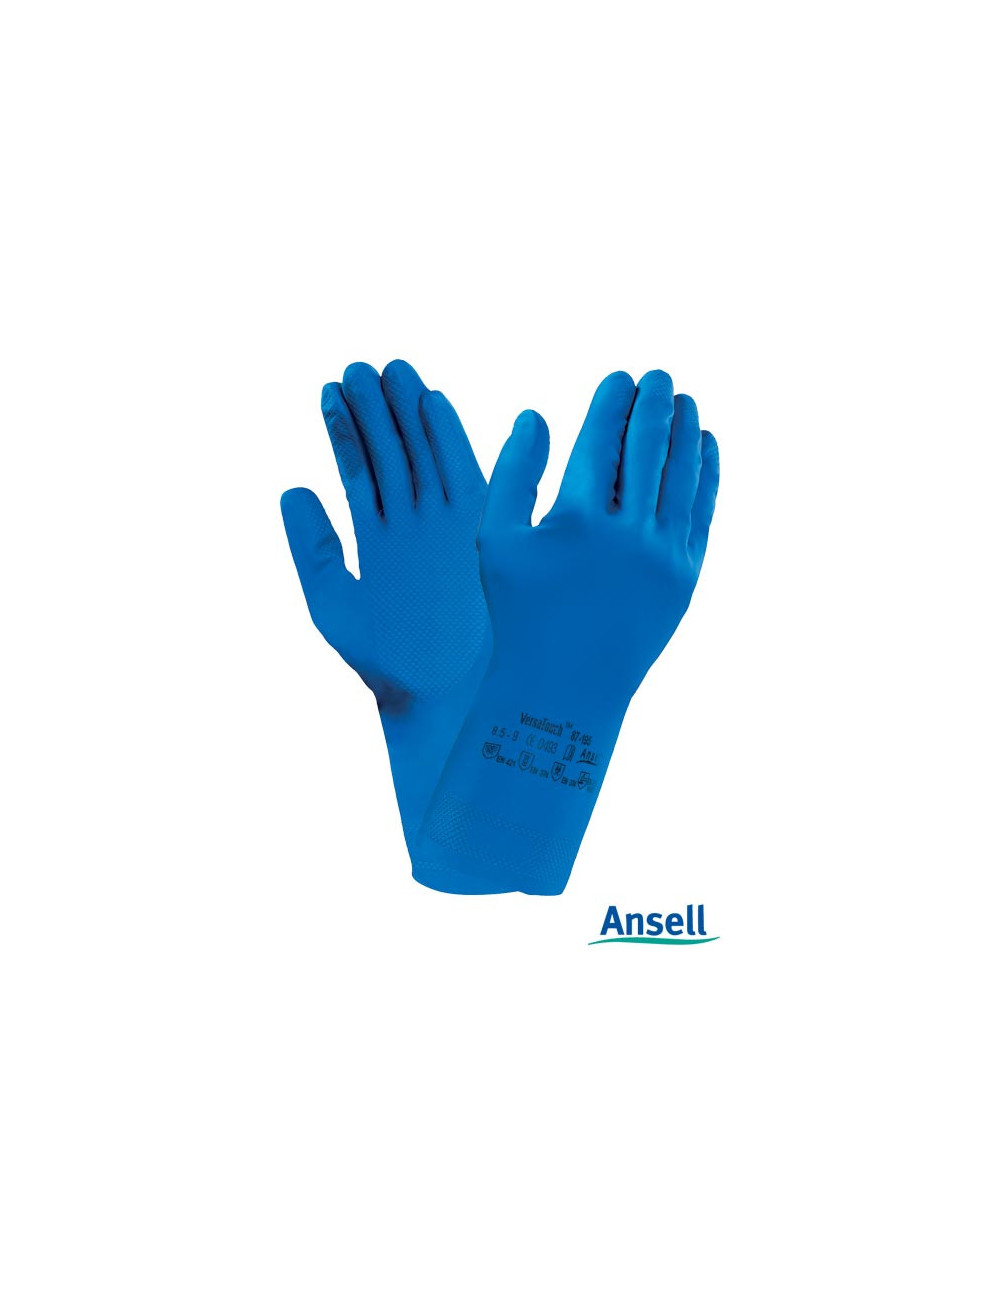 Protective gloves raversat87-195 n blue Ansell